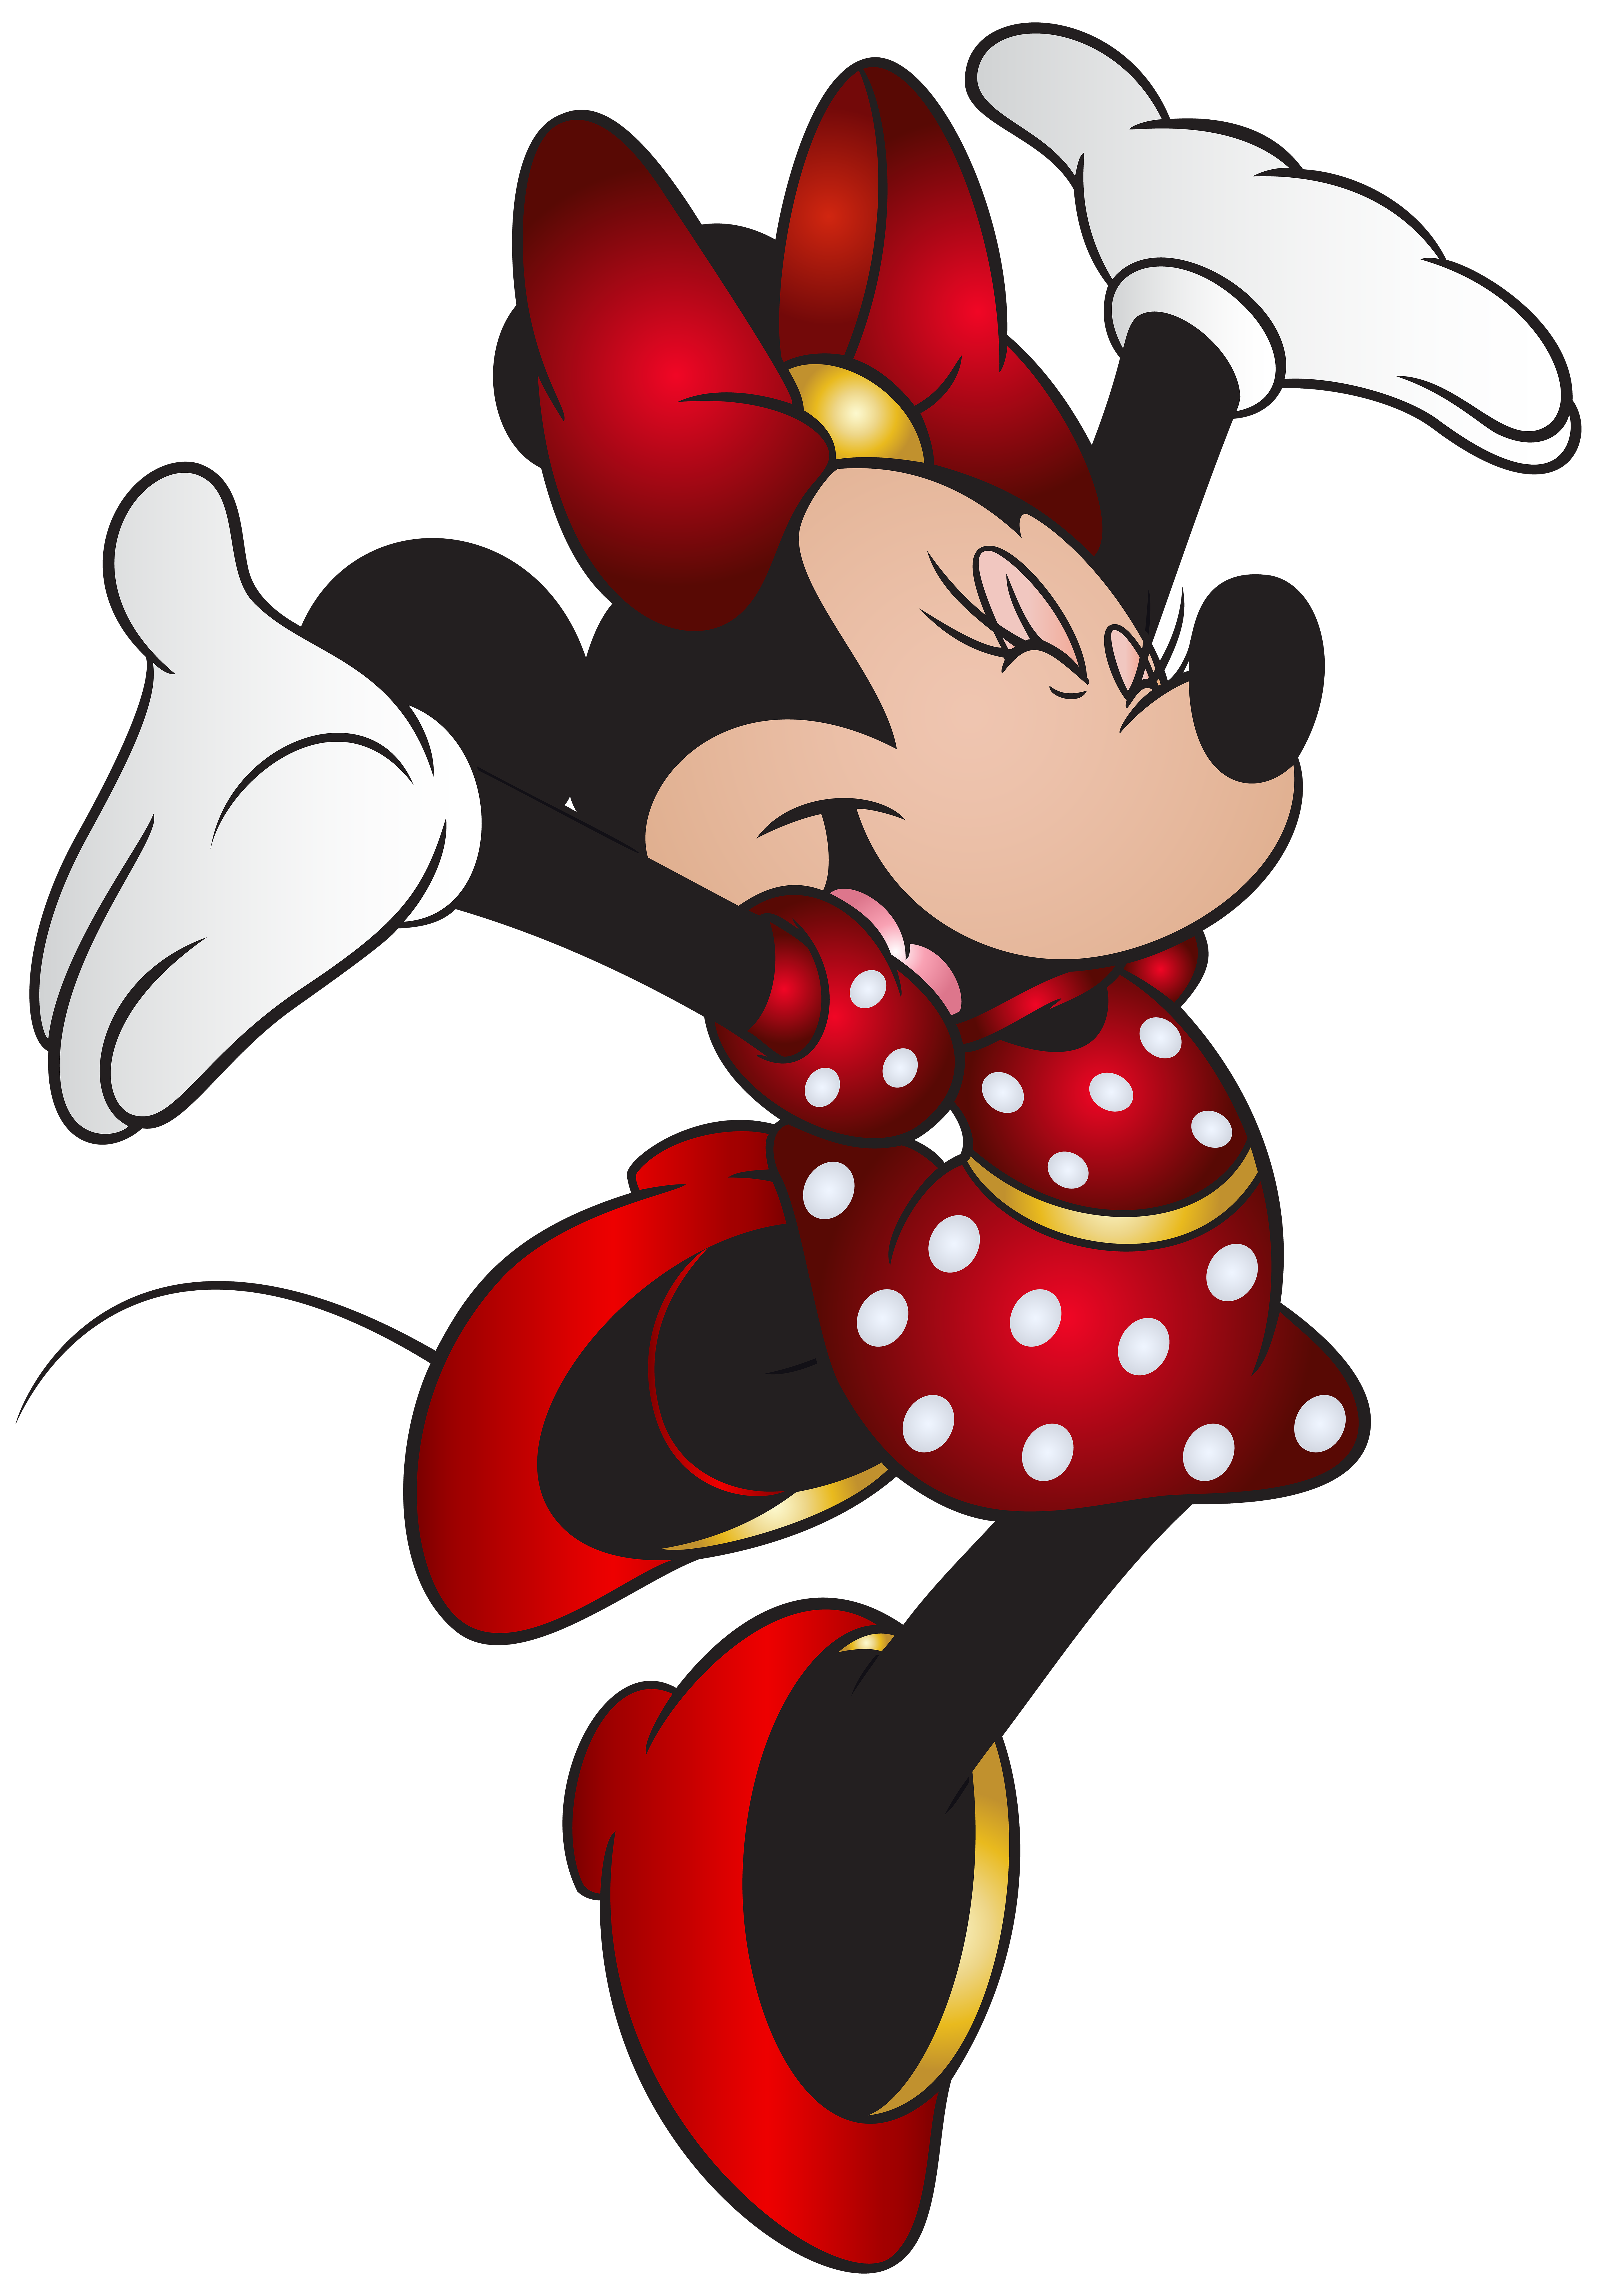 Joyful, Happy Minnie Mouse PNG Image #40249